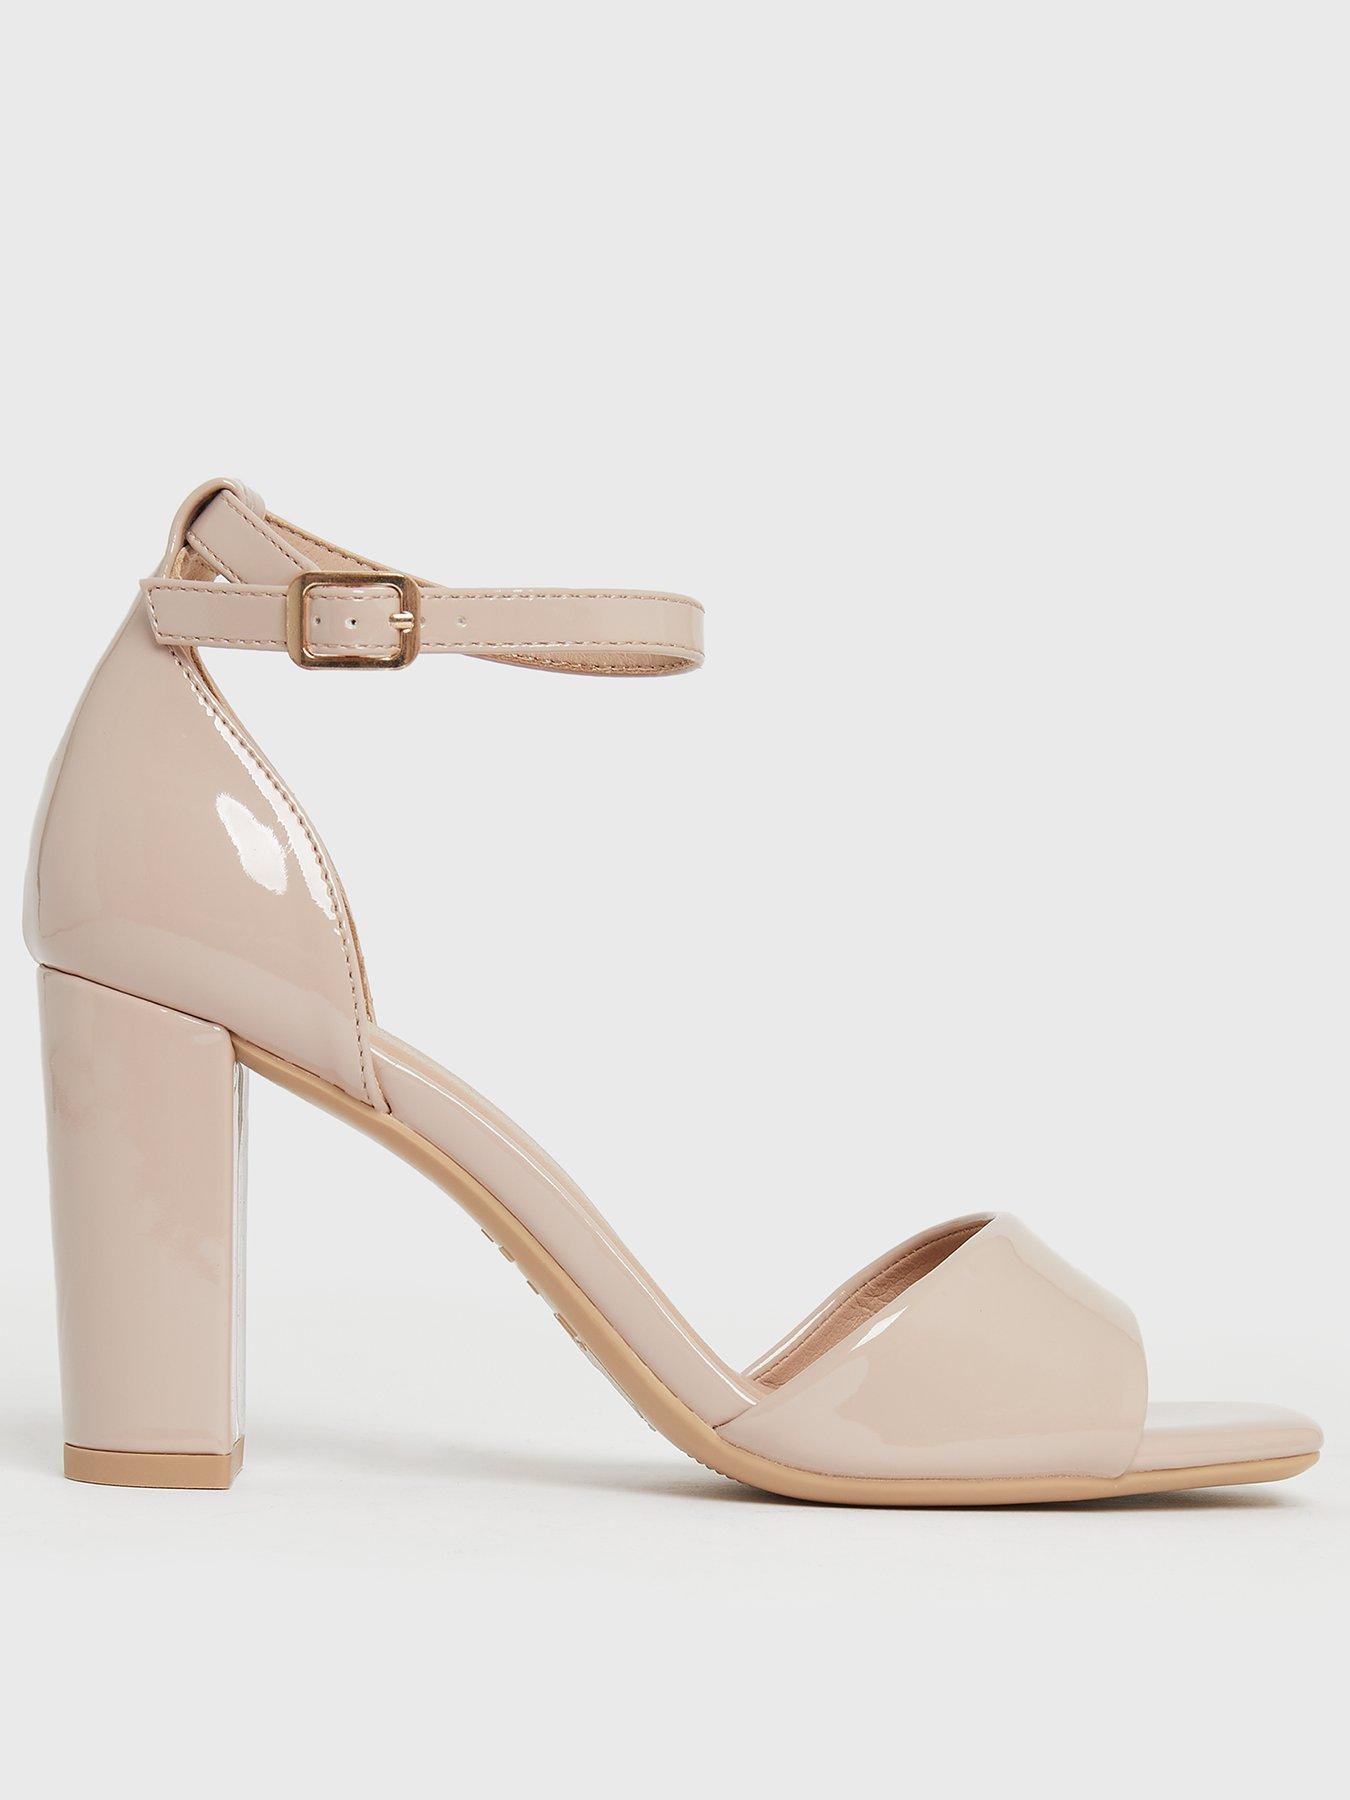 Womens Shoes Heels Sandal heels Pink New Look Patent 2 Part Stiletto Platform Heel Sandals Vegan in Pale Pink 